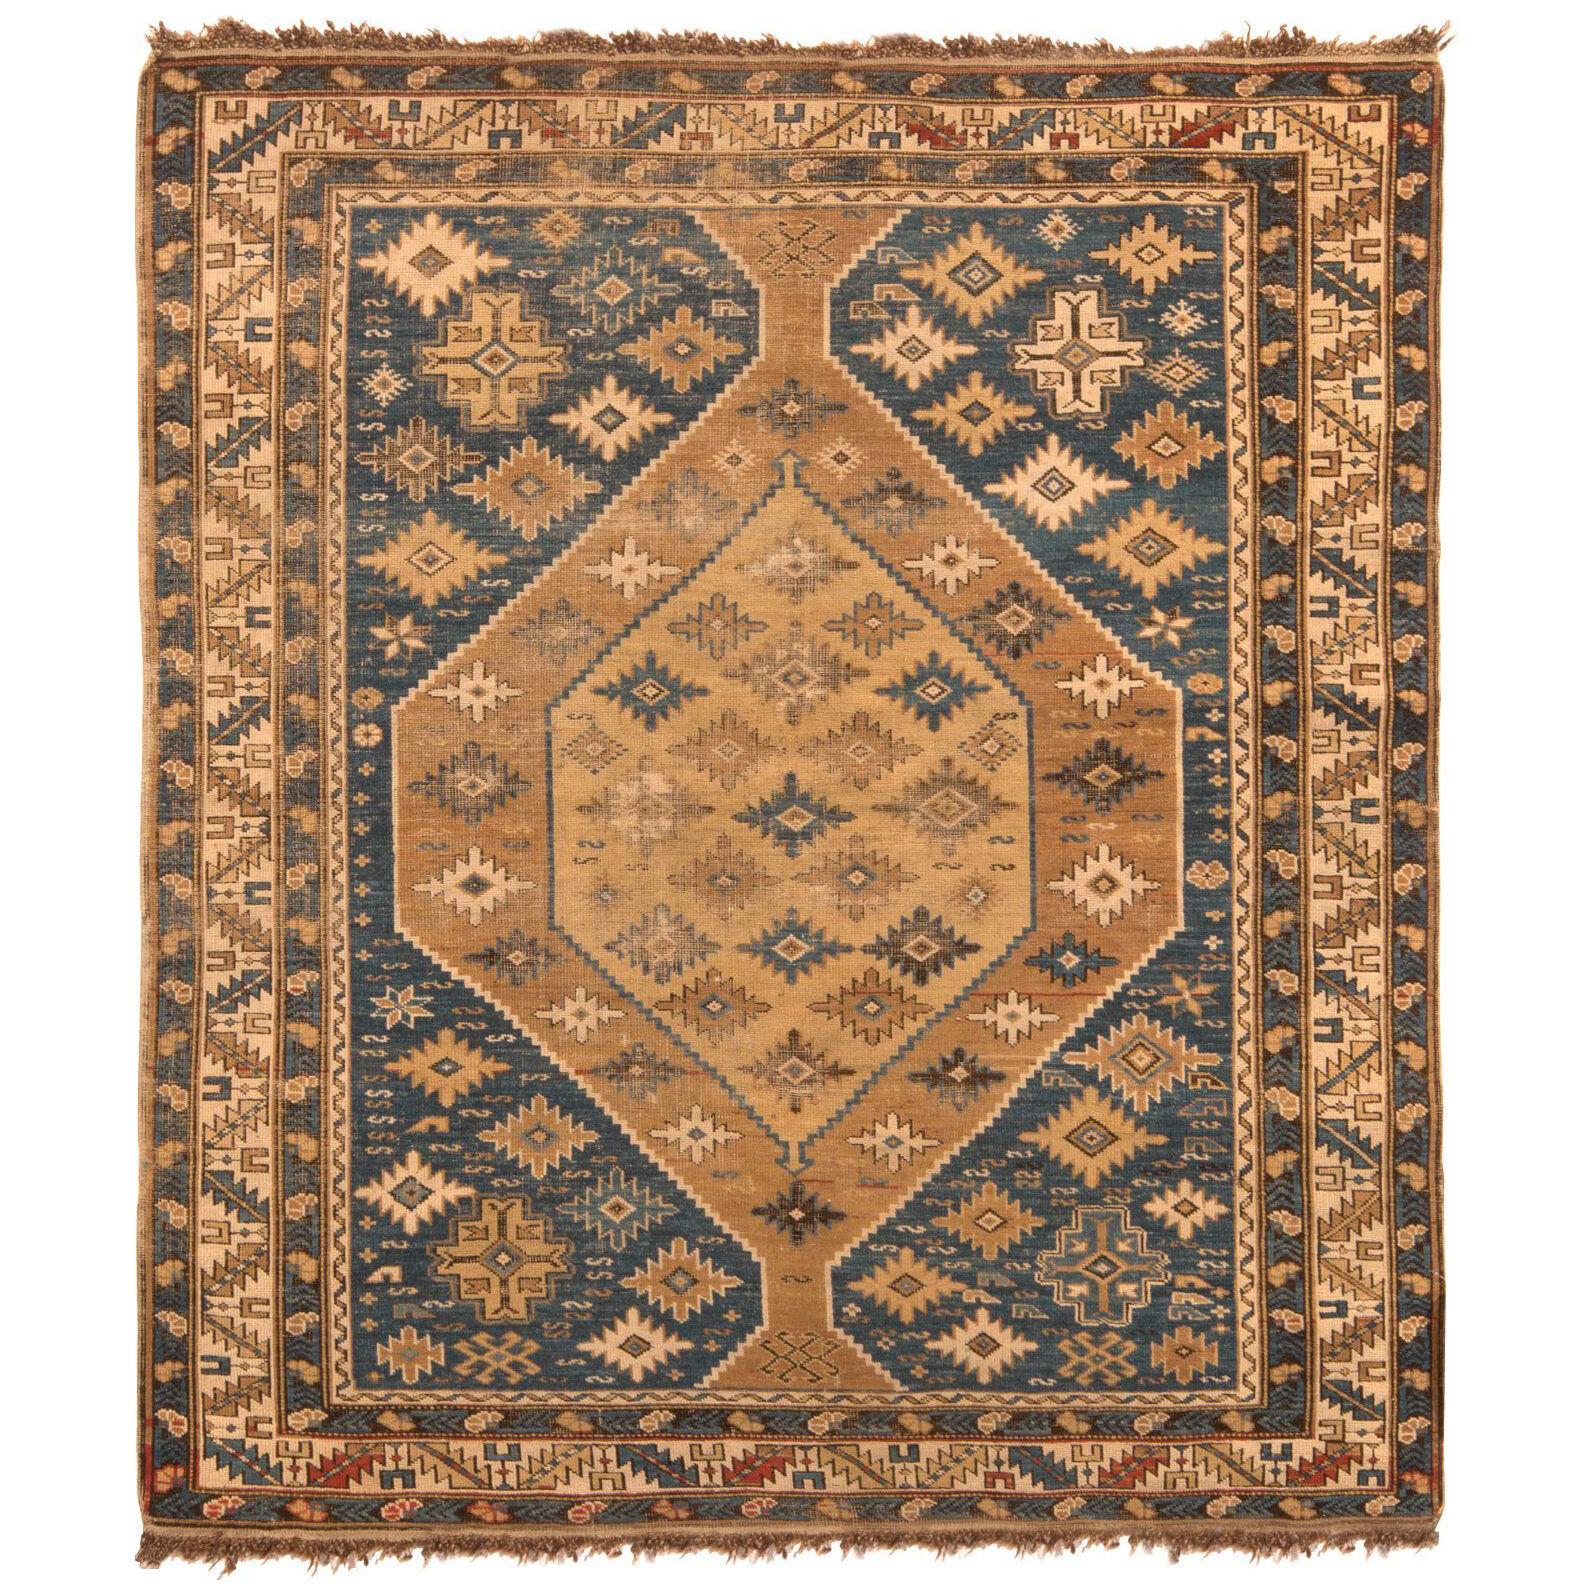 Antique Kuba Geometric Beige-brown and Blue Wool Russian Rug